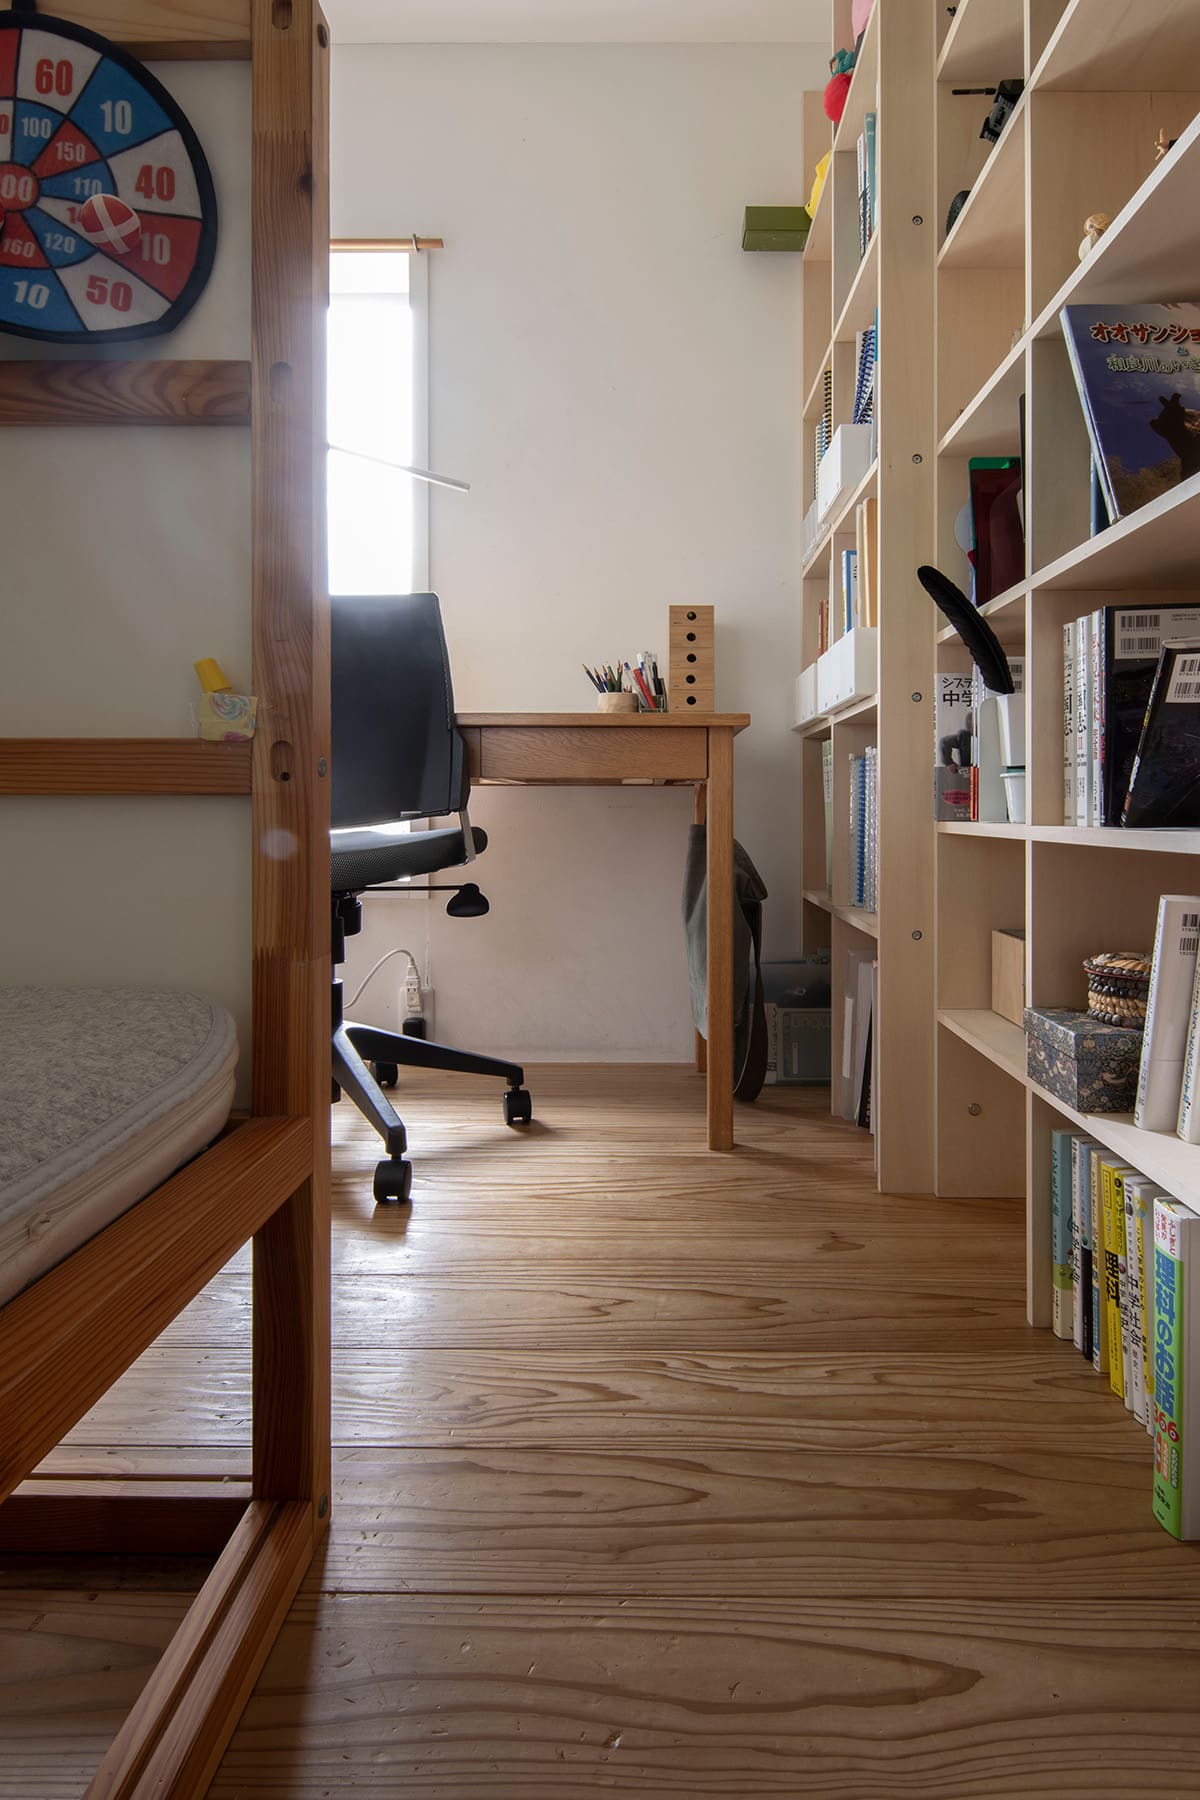 【File 760】本棚の間仕切りで子供室を作る - Shelf 壁一面の本棚 - マルゲリータお客様事例